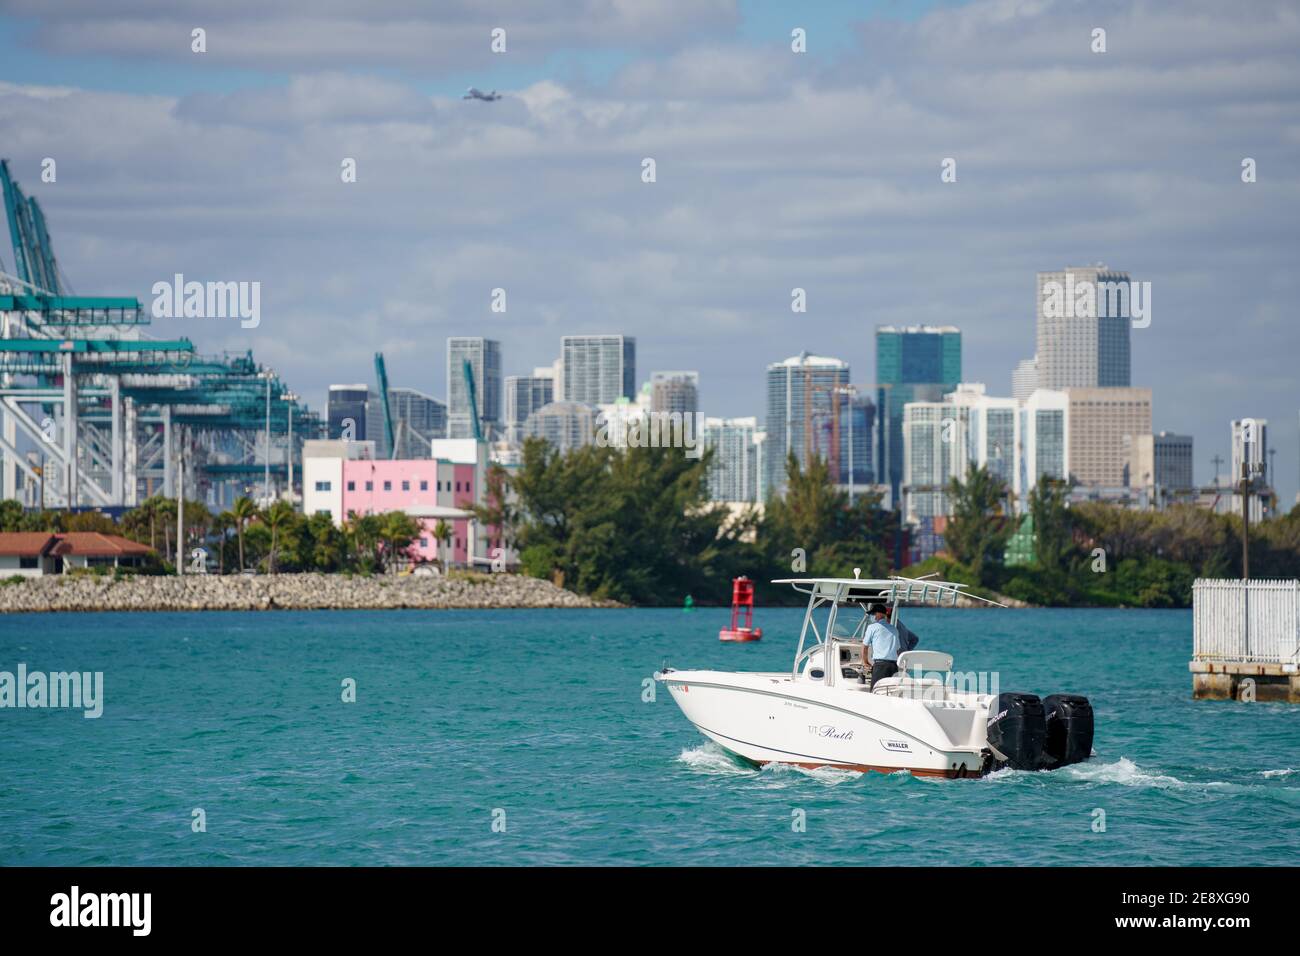 Men cruising on a boston whaler boat in Miami Beach FL Stock Photo